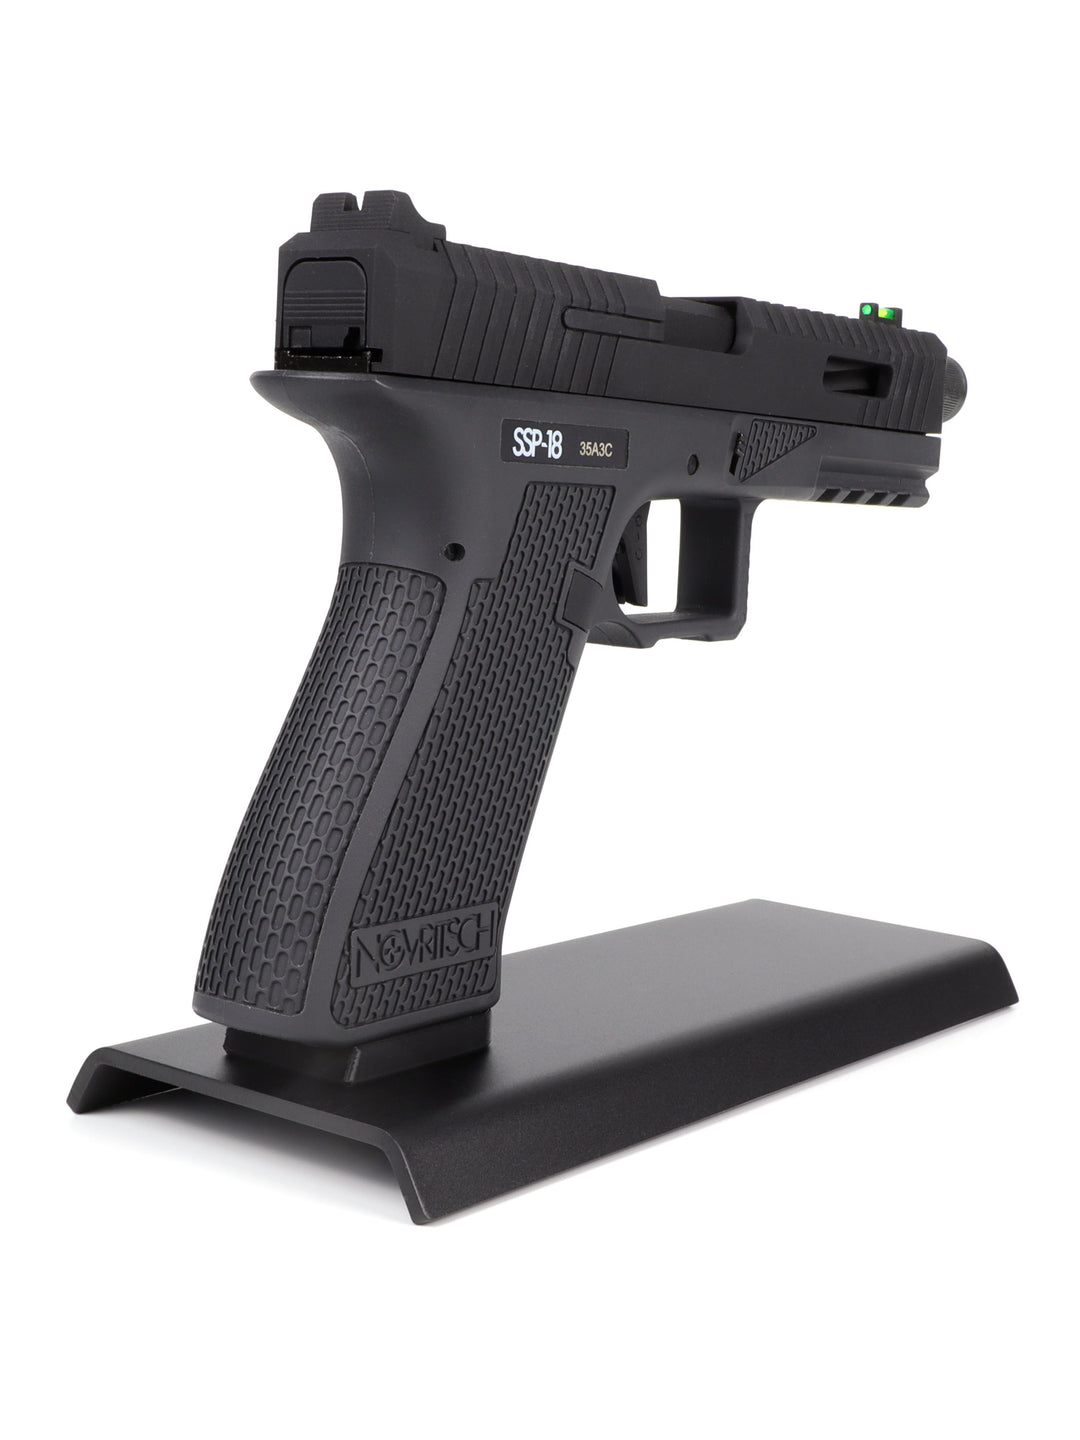 SSP18 / Glock Pistol Stand